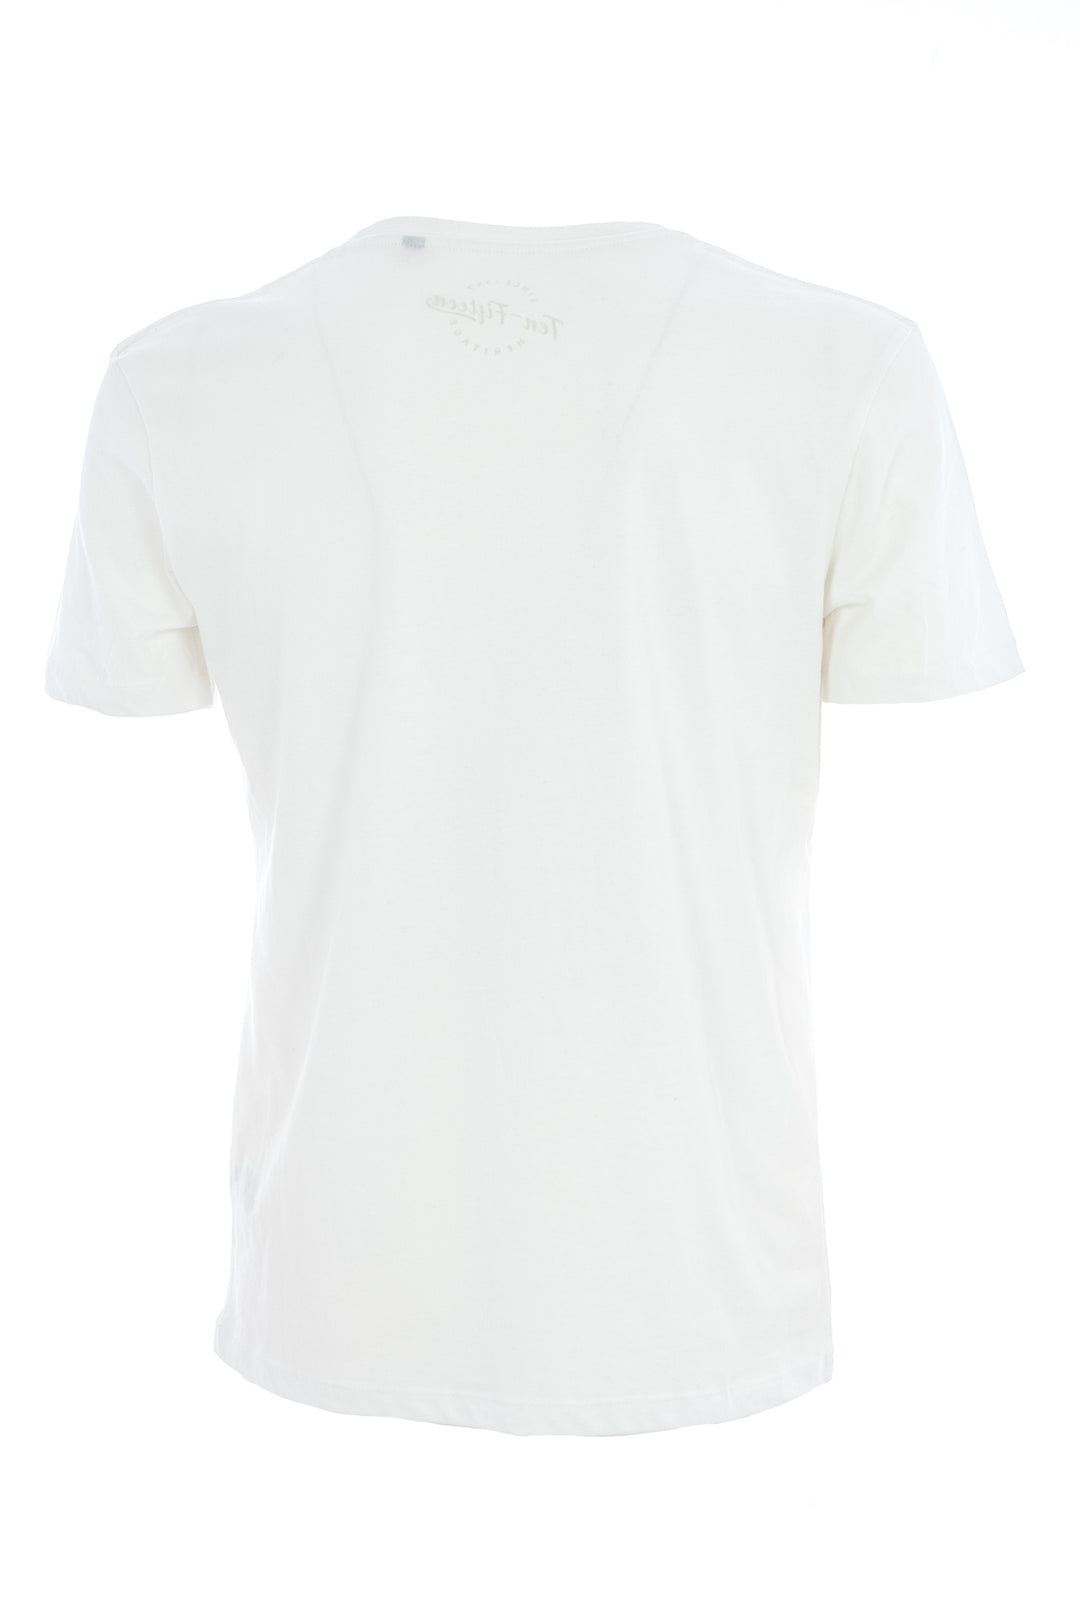 TEN-FIFTEEN T-shirt bianca in cotone con stampa barca - Mancinelli 1954